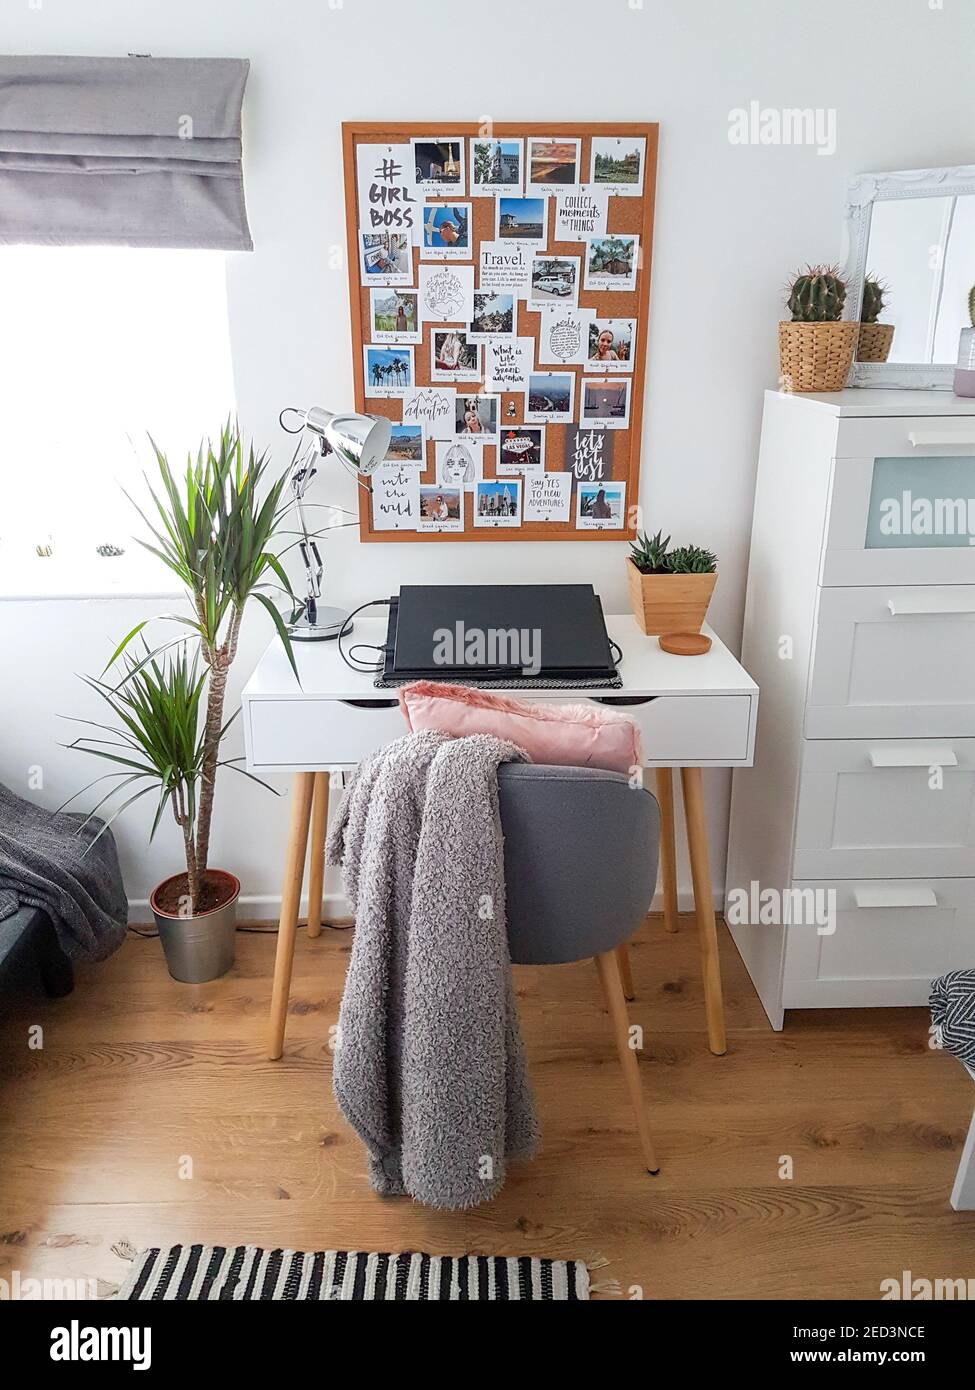 Small Scandinavian inspired study room, home office, interior design,  plants Stock Photo - Alamy